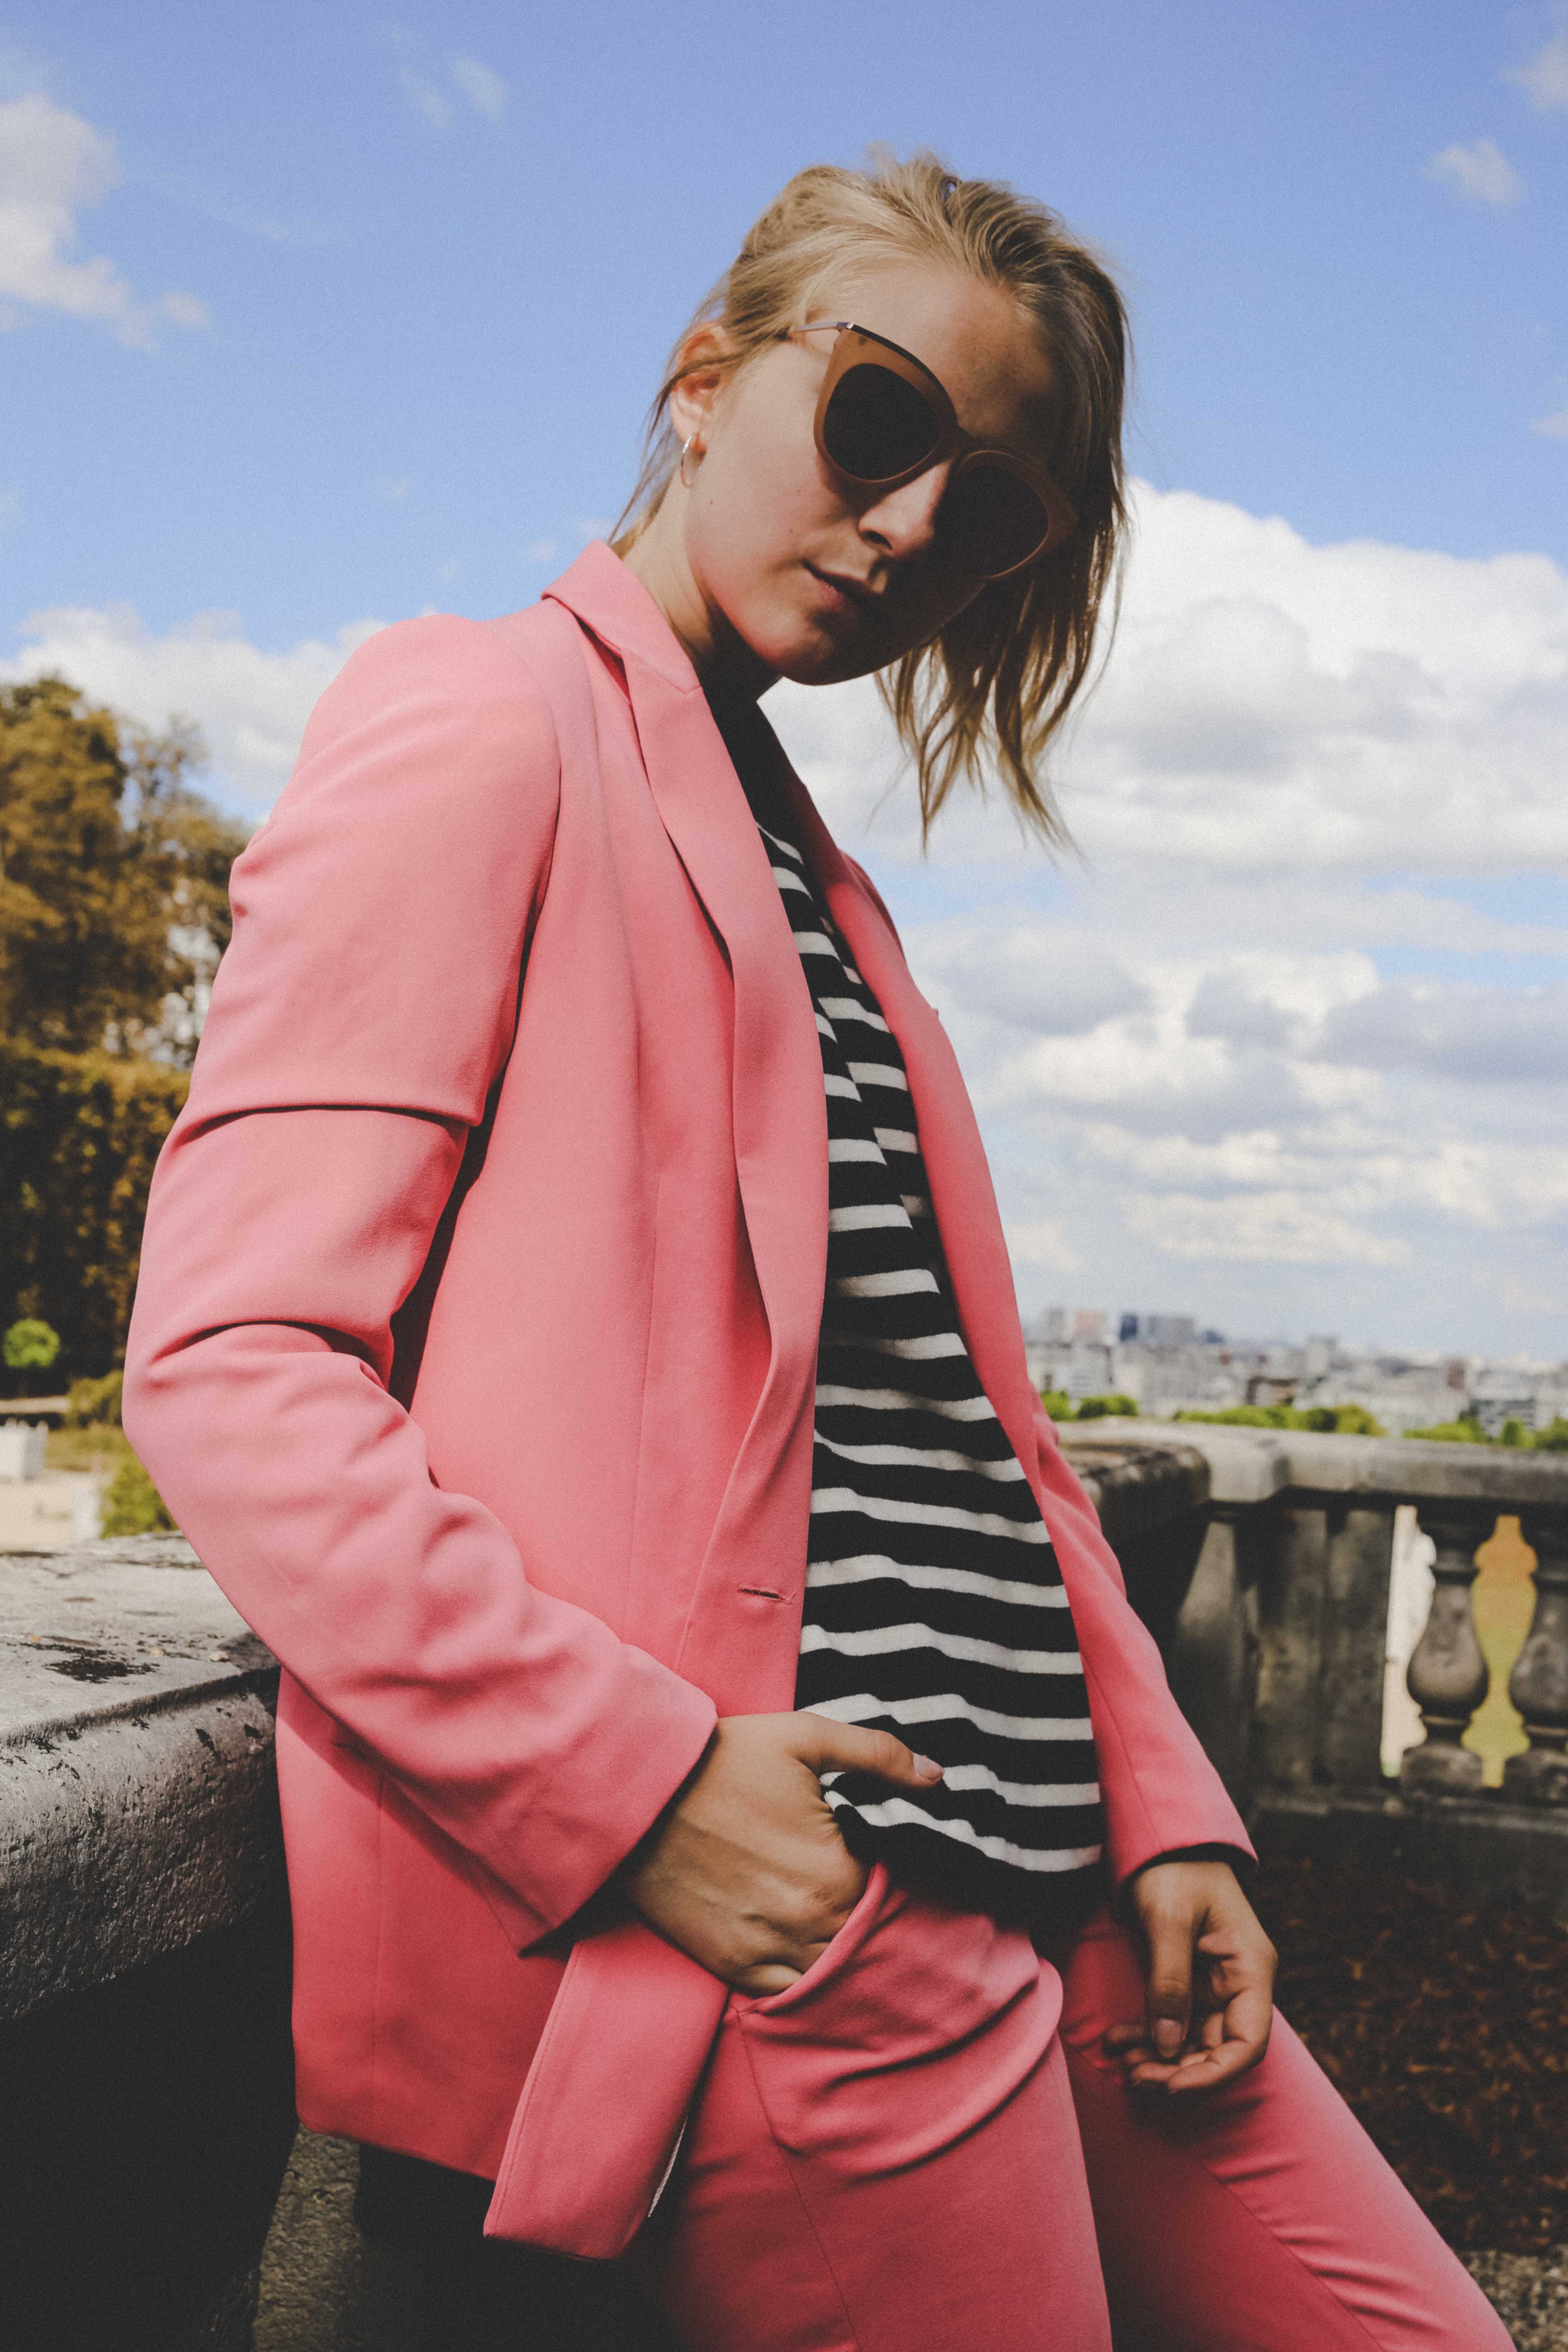 trendreport-pinker-hosenanzug-pink-suit-how-to-paris-fashionblog-modeblog-outfit_1892